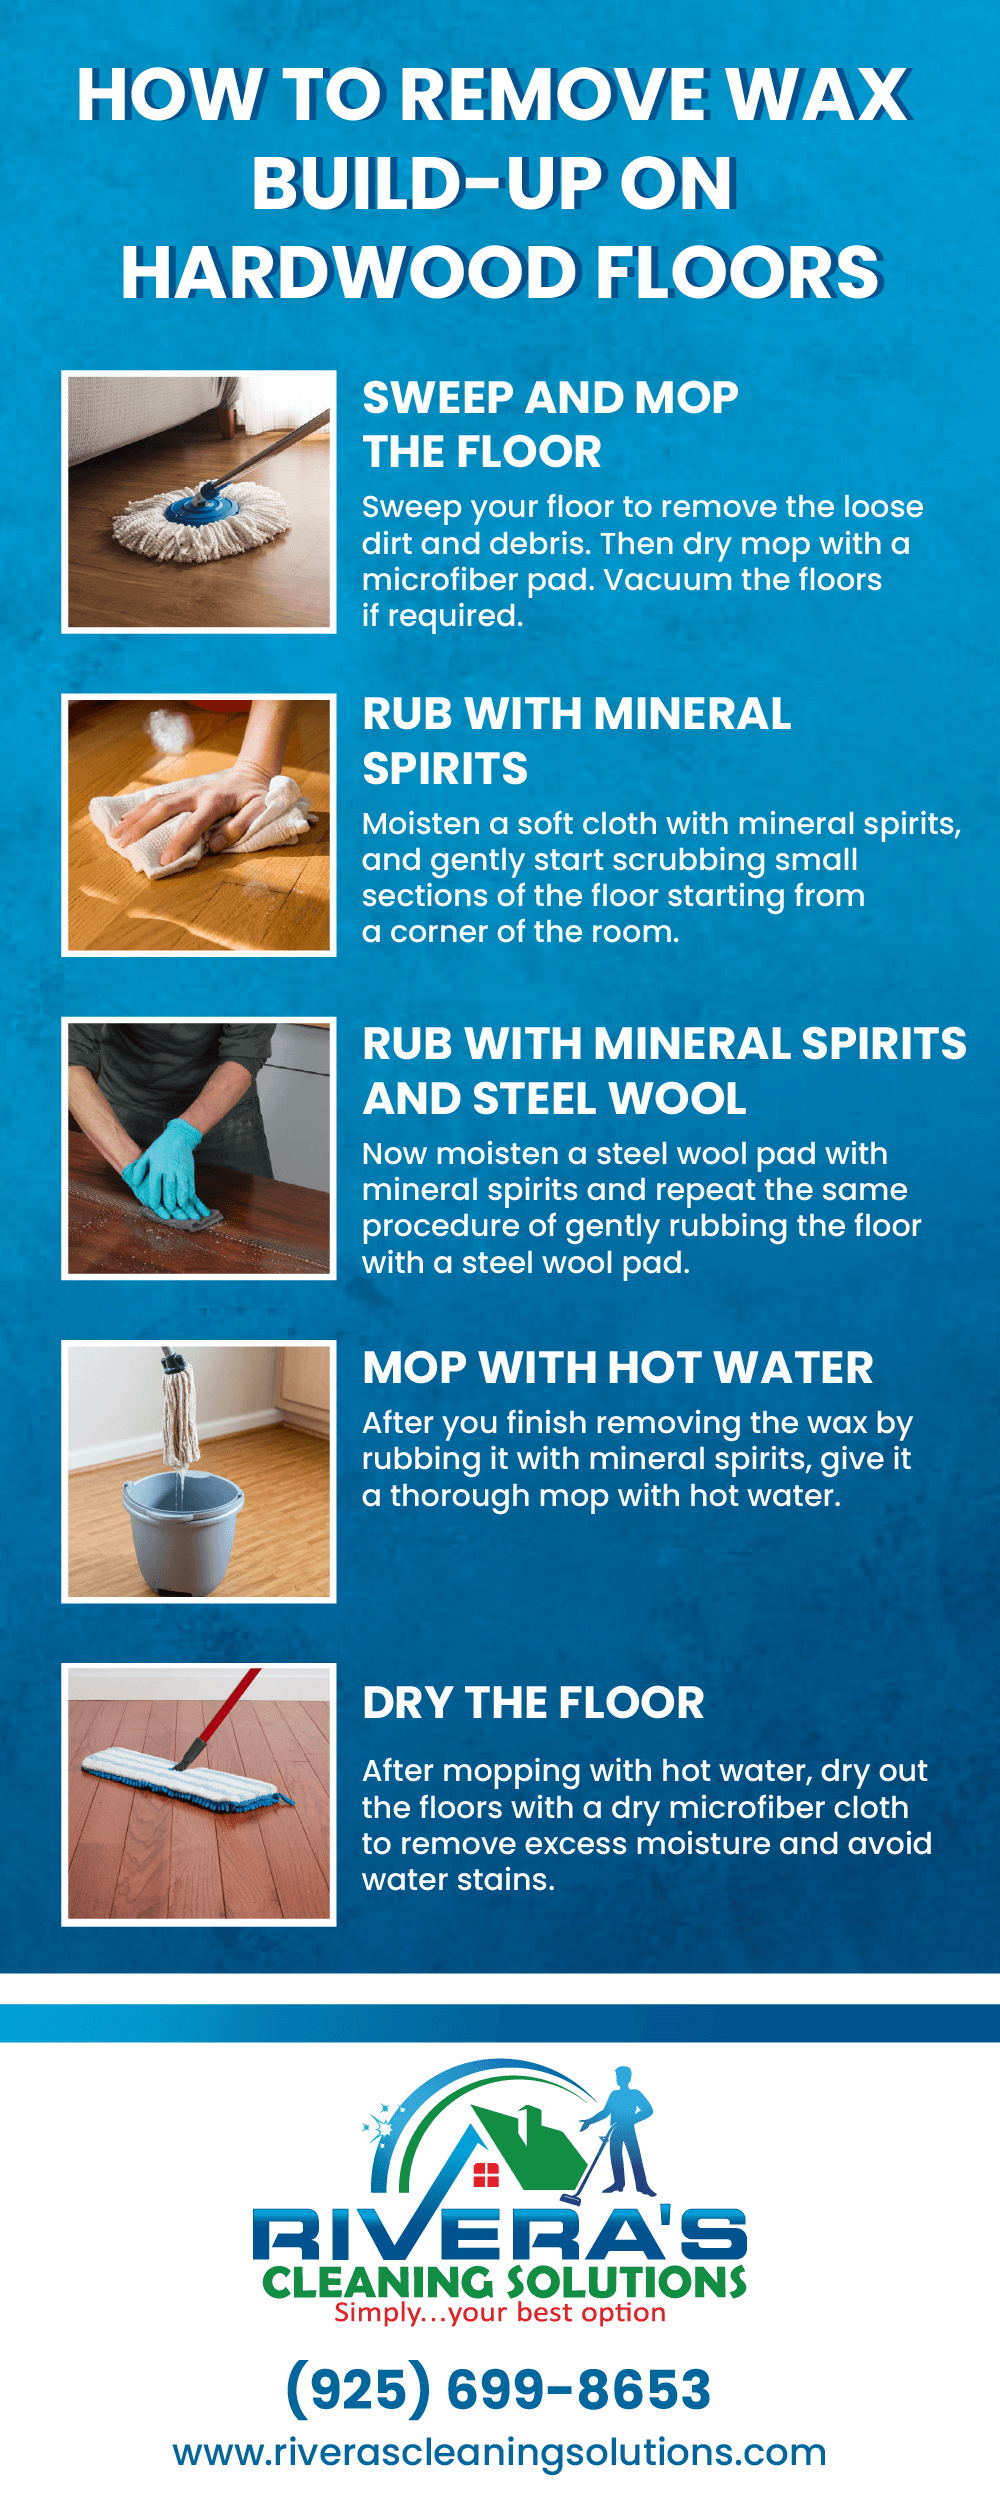 How to Remove Wax Build-Up on Hardwood Floors